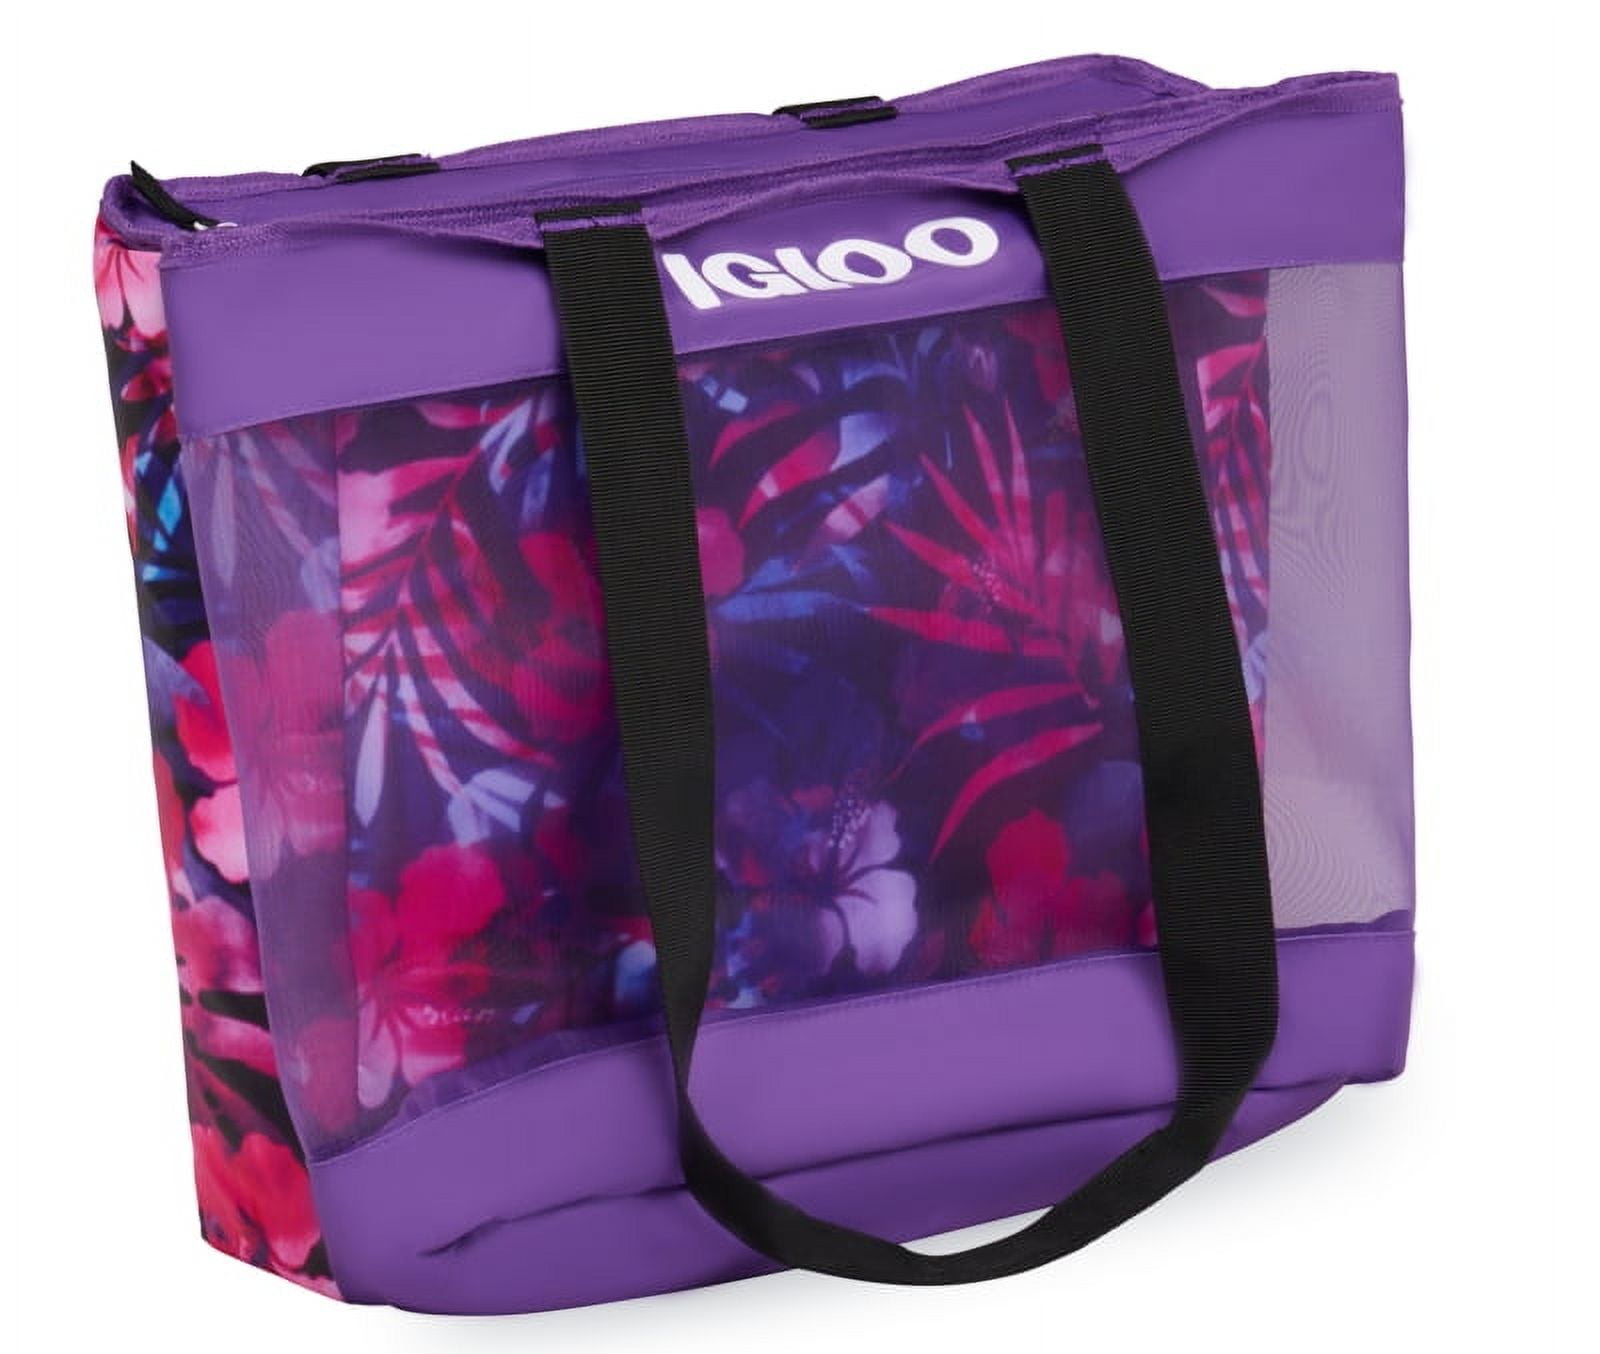 Igloo Dual Compartment 20qt Tote Cooler Bag - Minnie Mouse